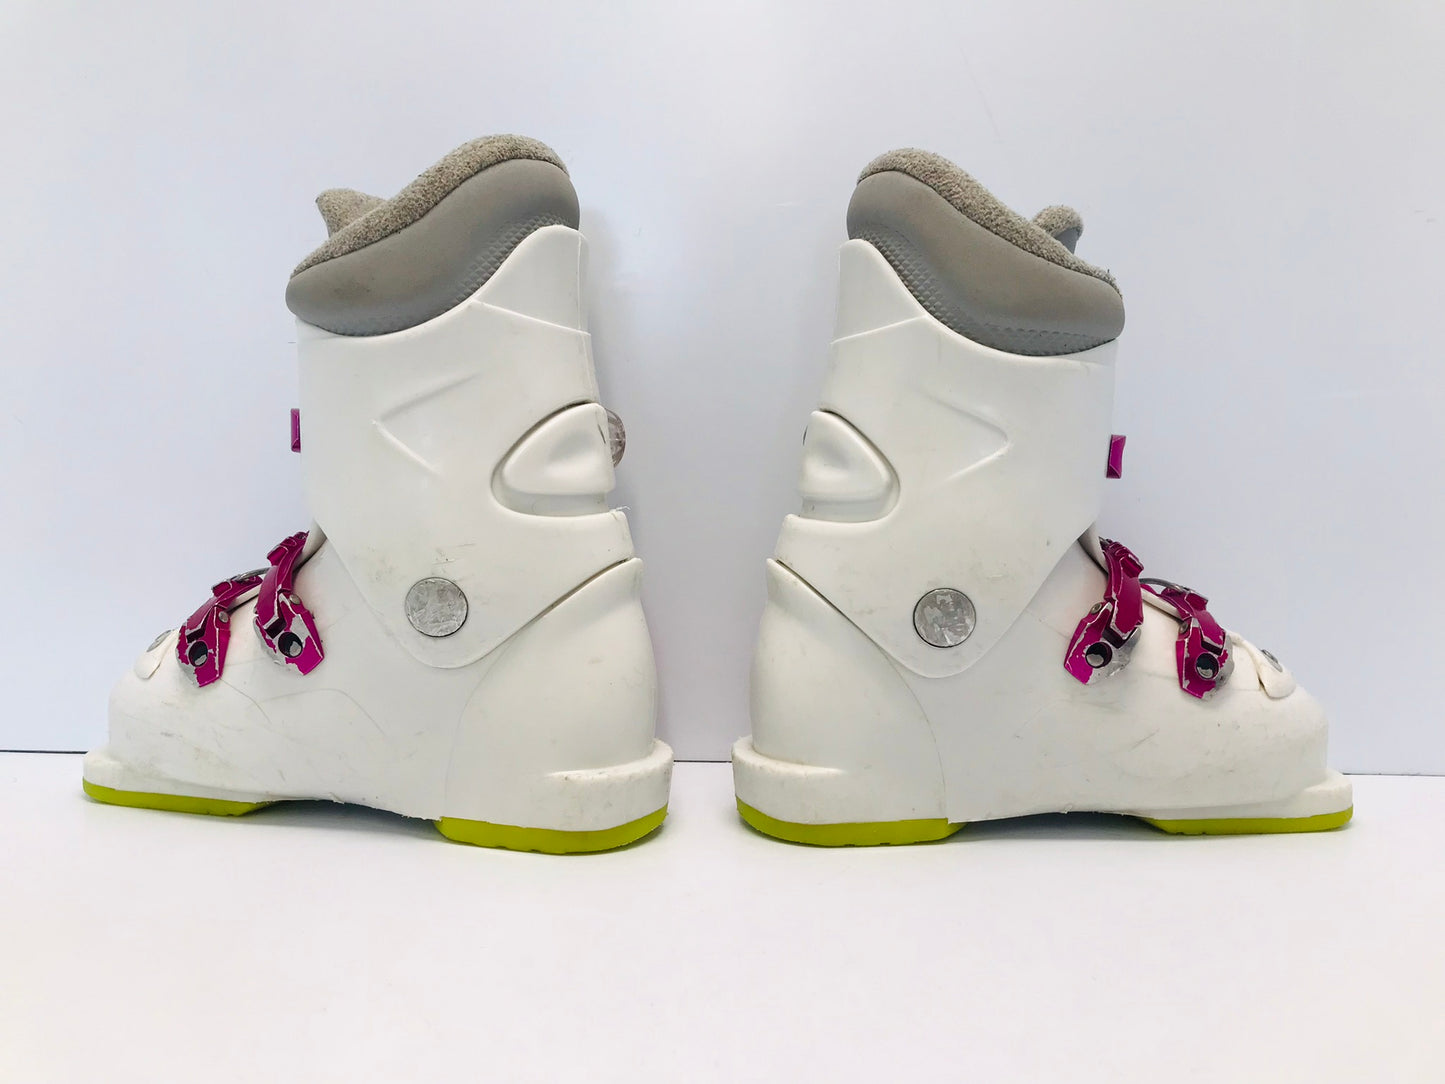 Ski Boots Mondo Size 19.0 Child Size 19.0 237 mm Roxy White Pink Yellow minor Scratches